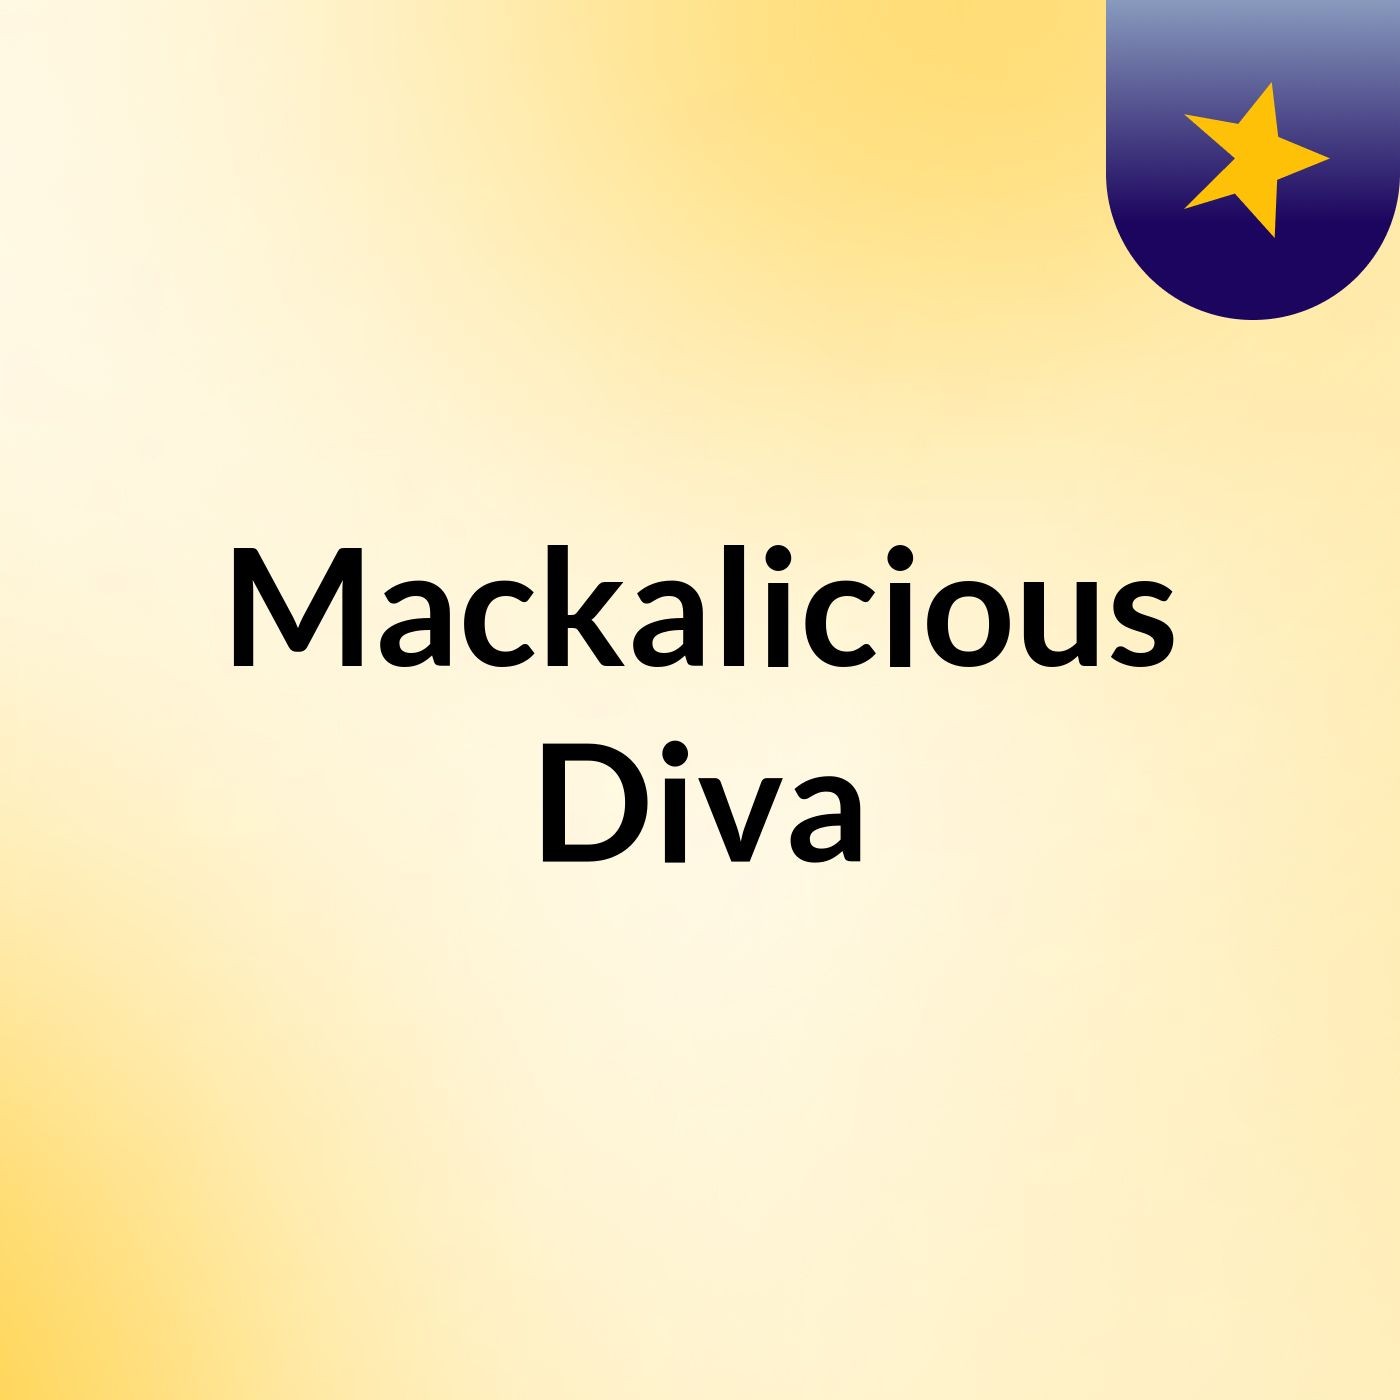 Mackalicious Diva